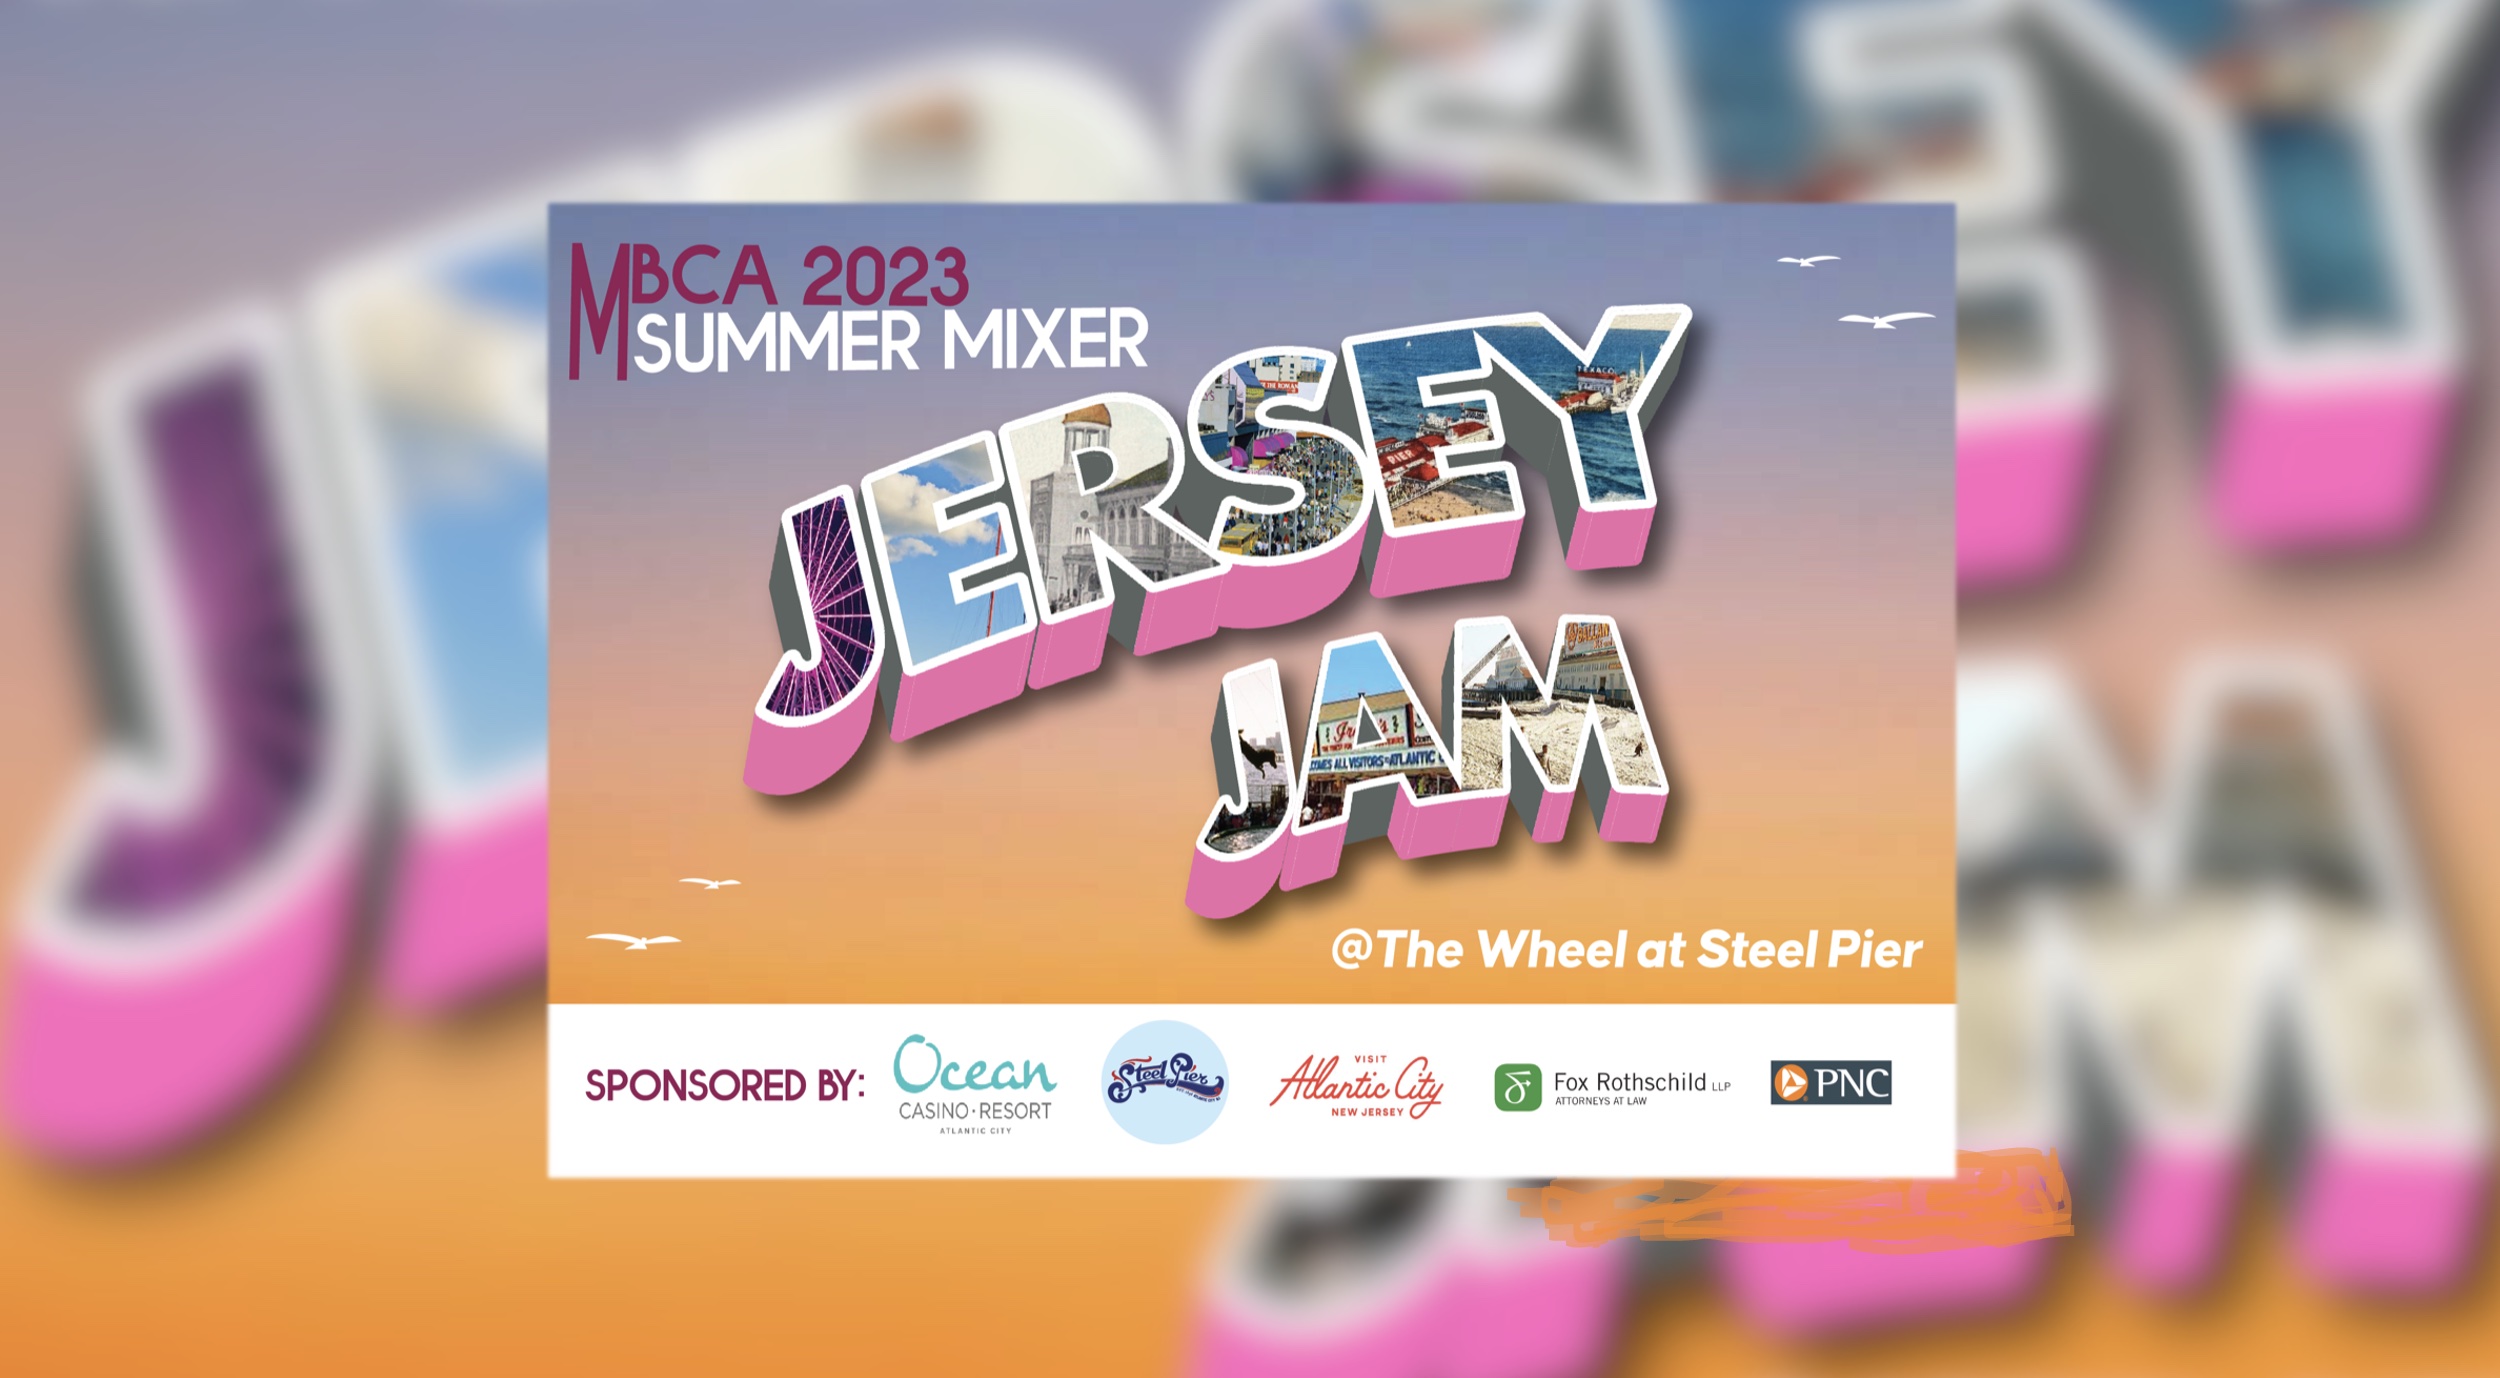 MBCA Summer Mixer: Jersey Jam